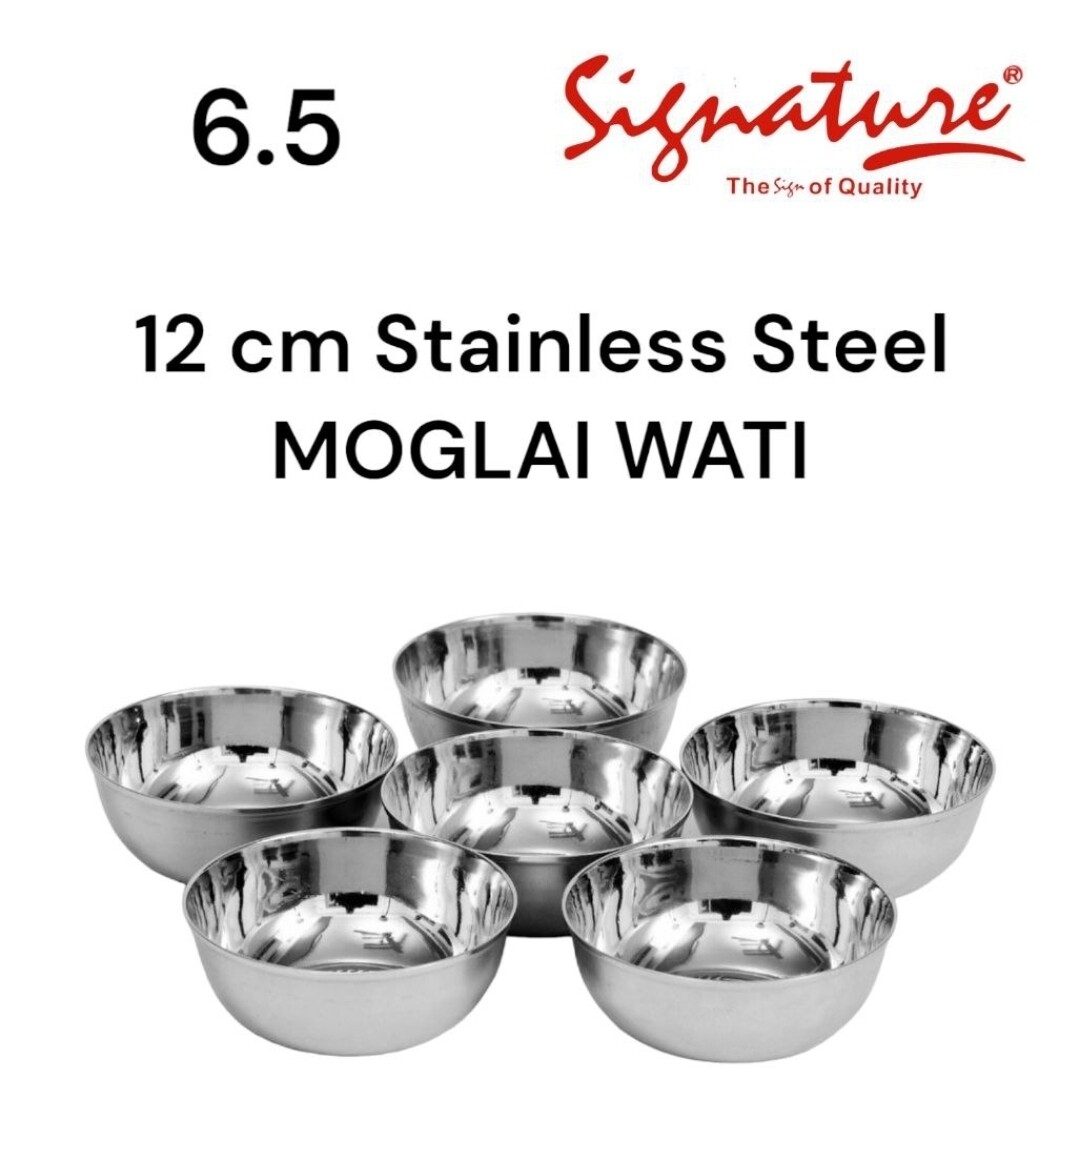 Signature 12cm stainless steel bowl moglai wati